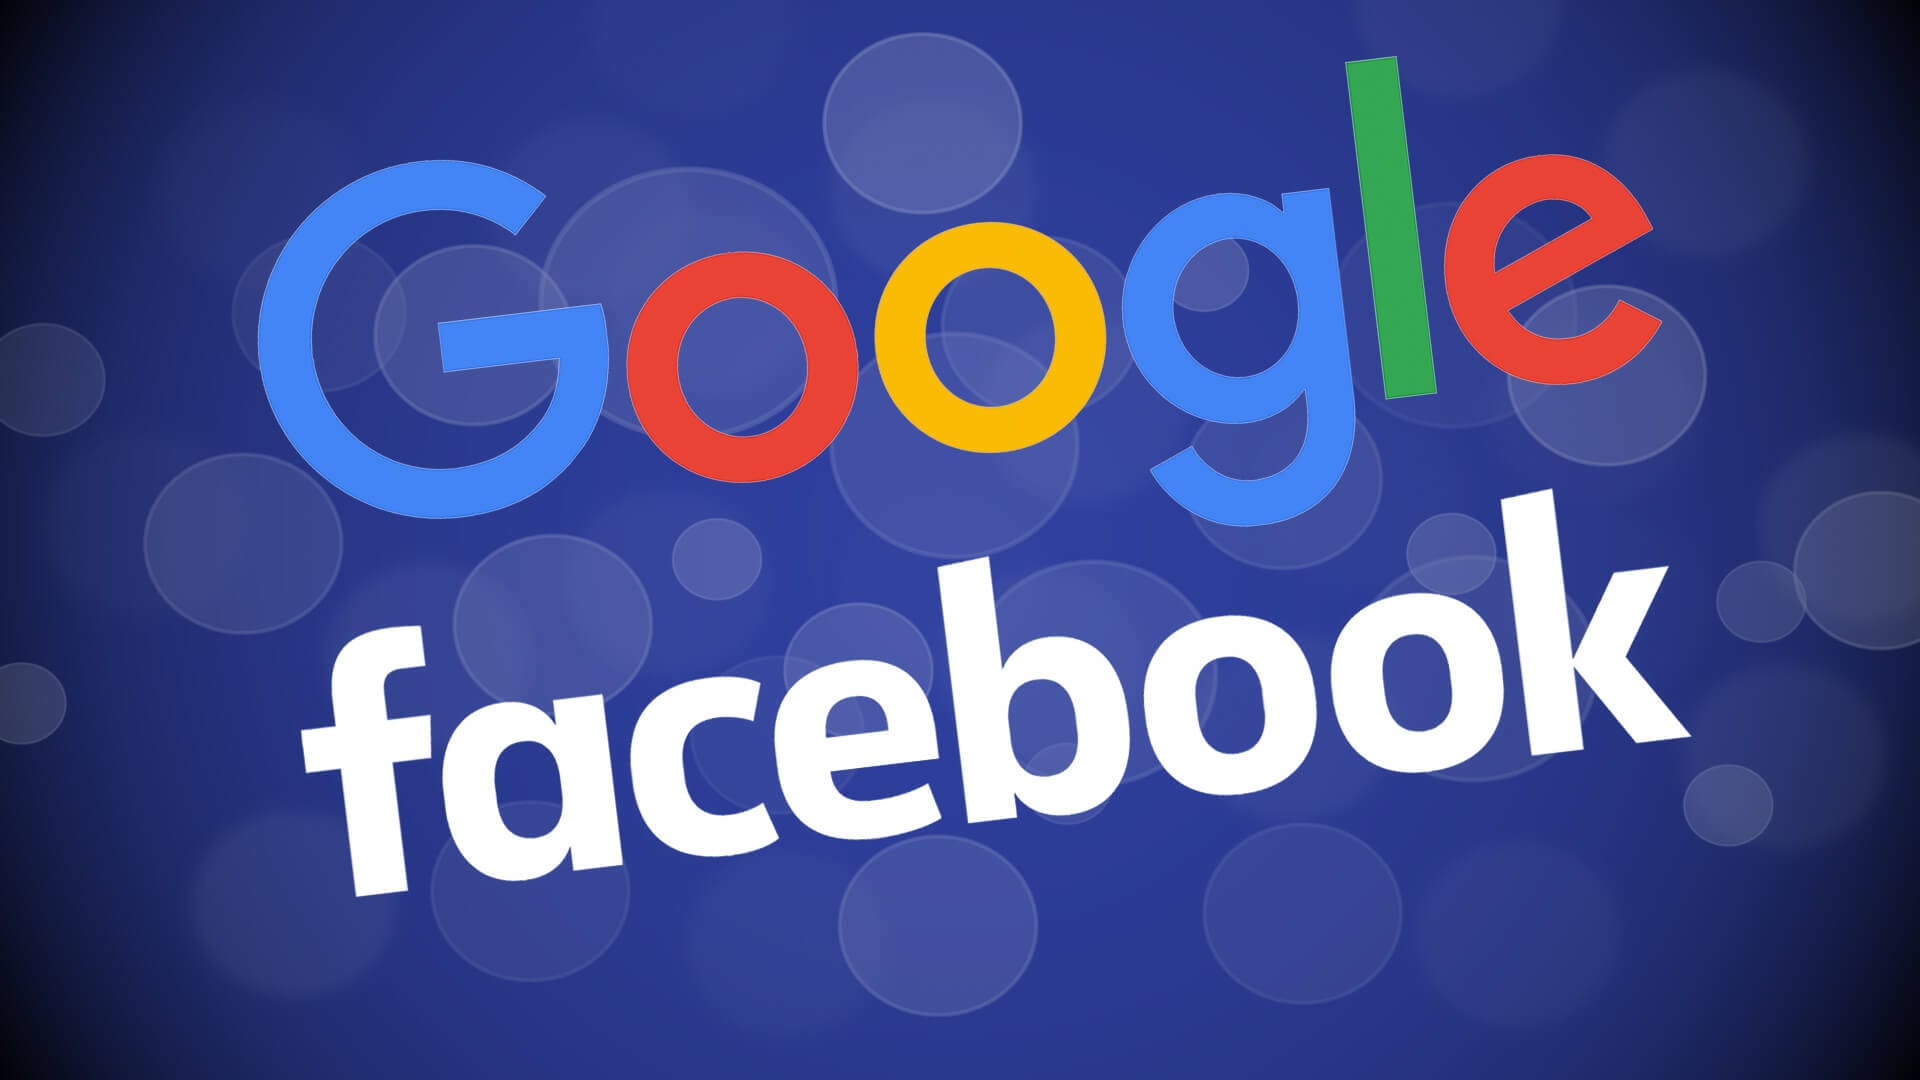 Google and Facebook lookalike audiencesGoogle and Facebook lookalike audiences